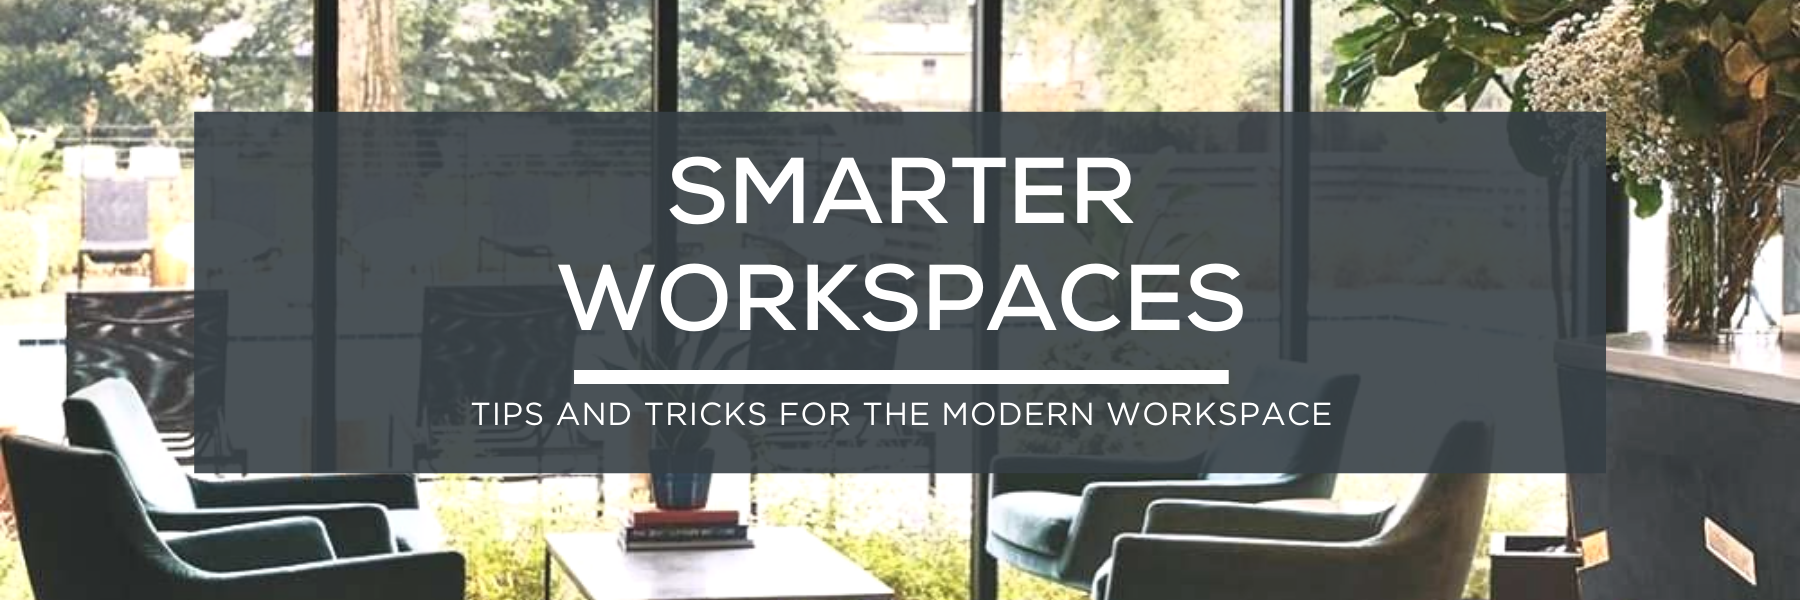 Apex smarter workspaces